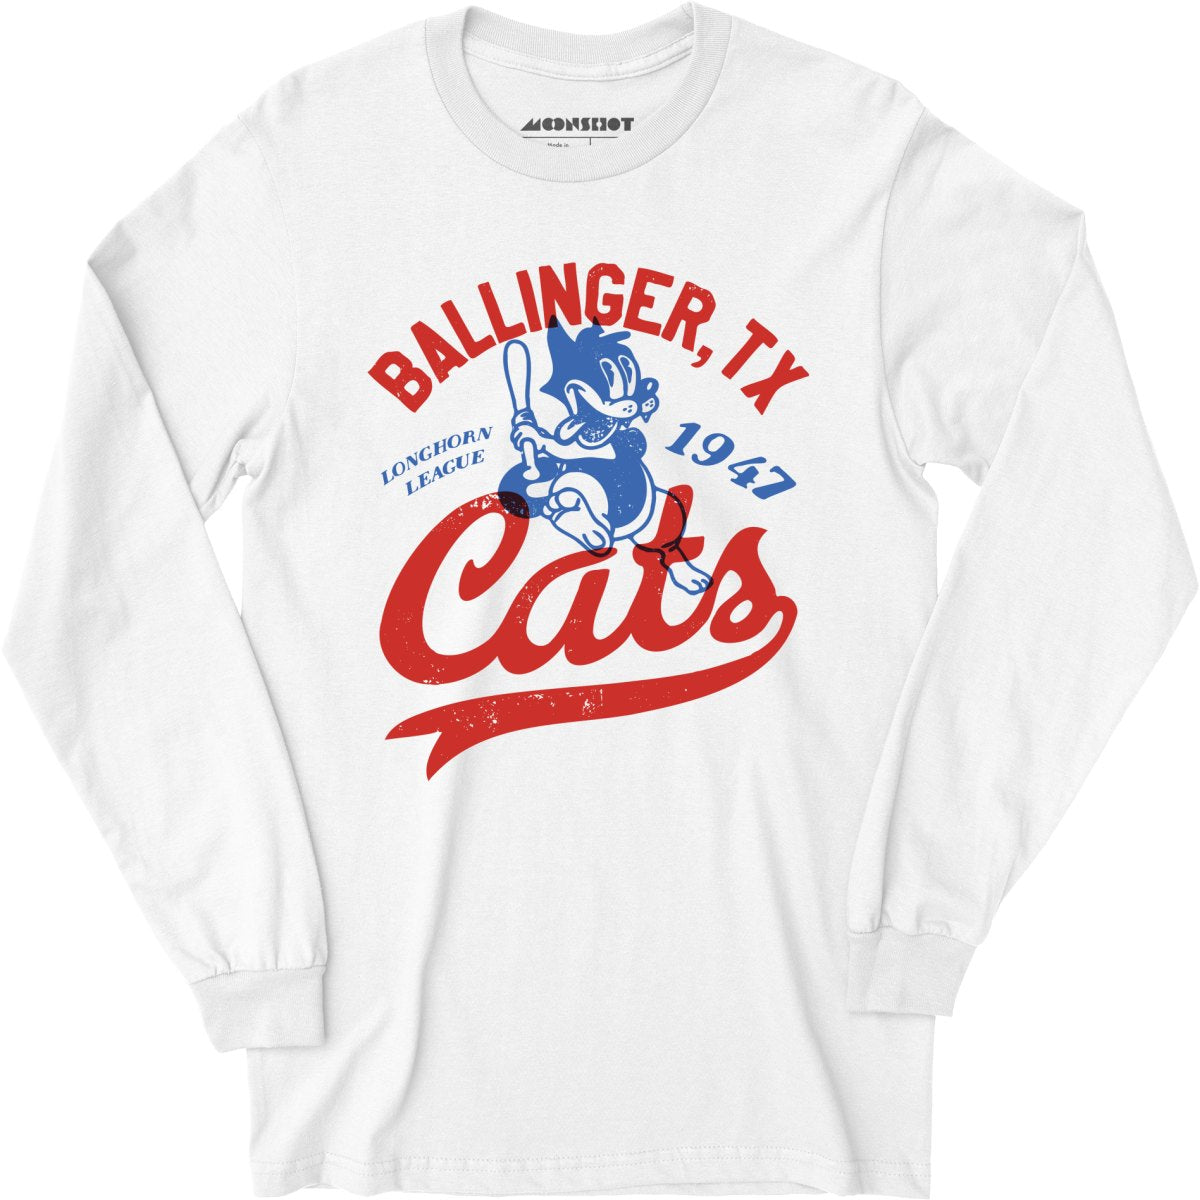 Ballinger Cats - Texas - Vintage Defunct Baseball Teams - Long Sleeve T-Shirt